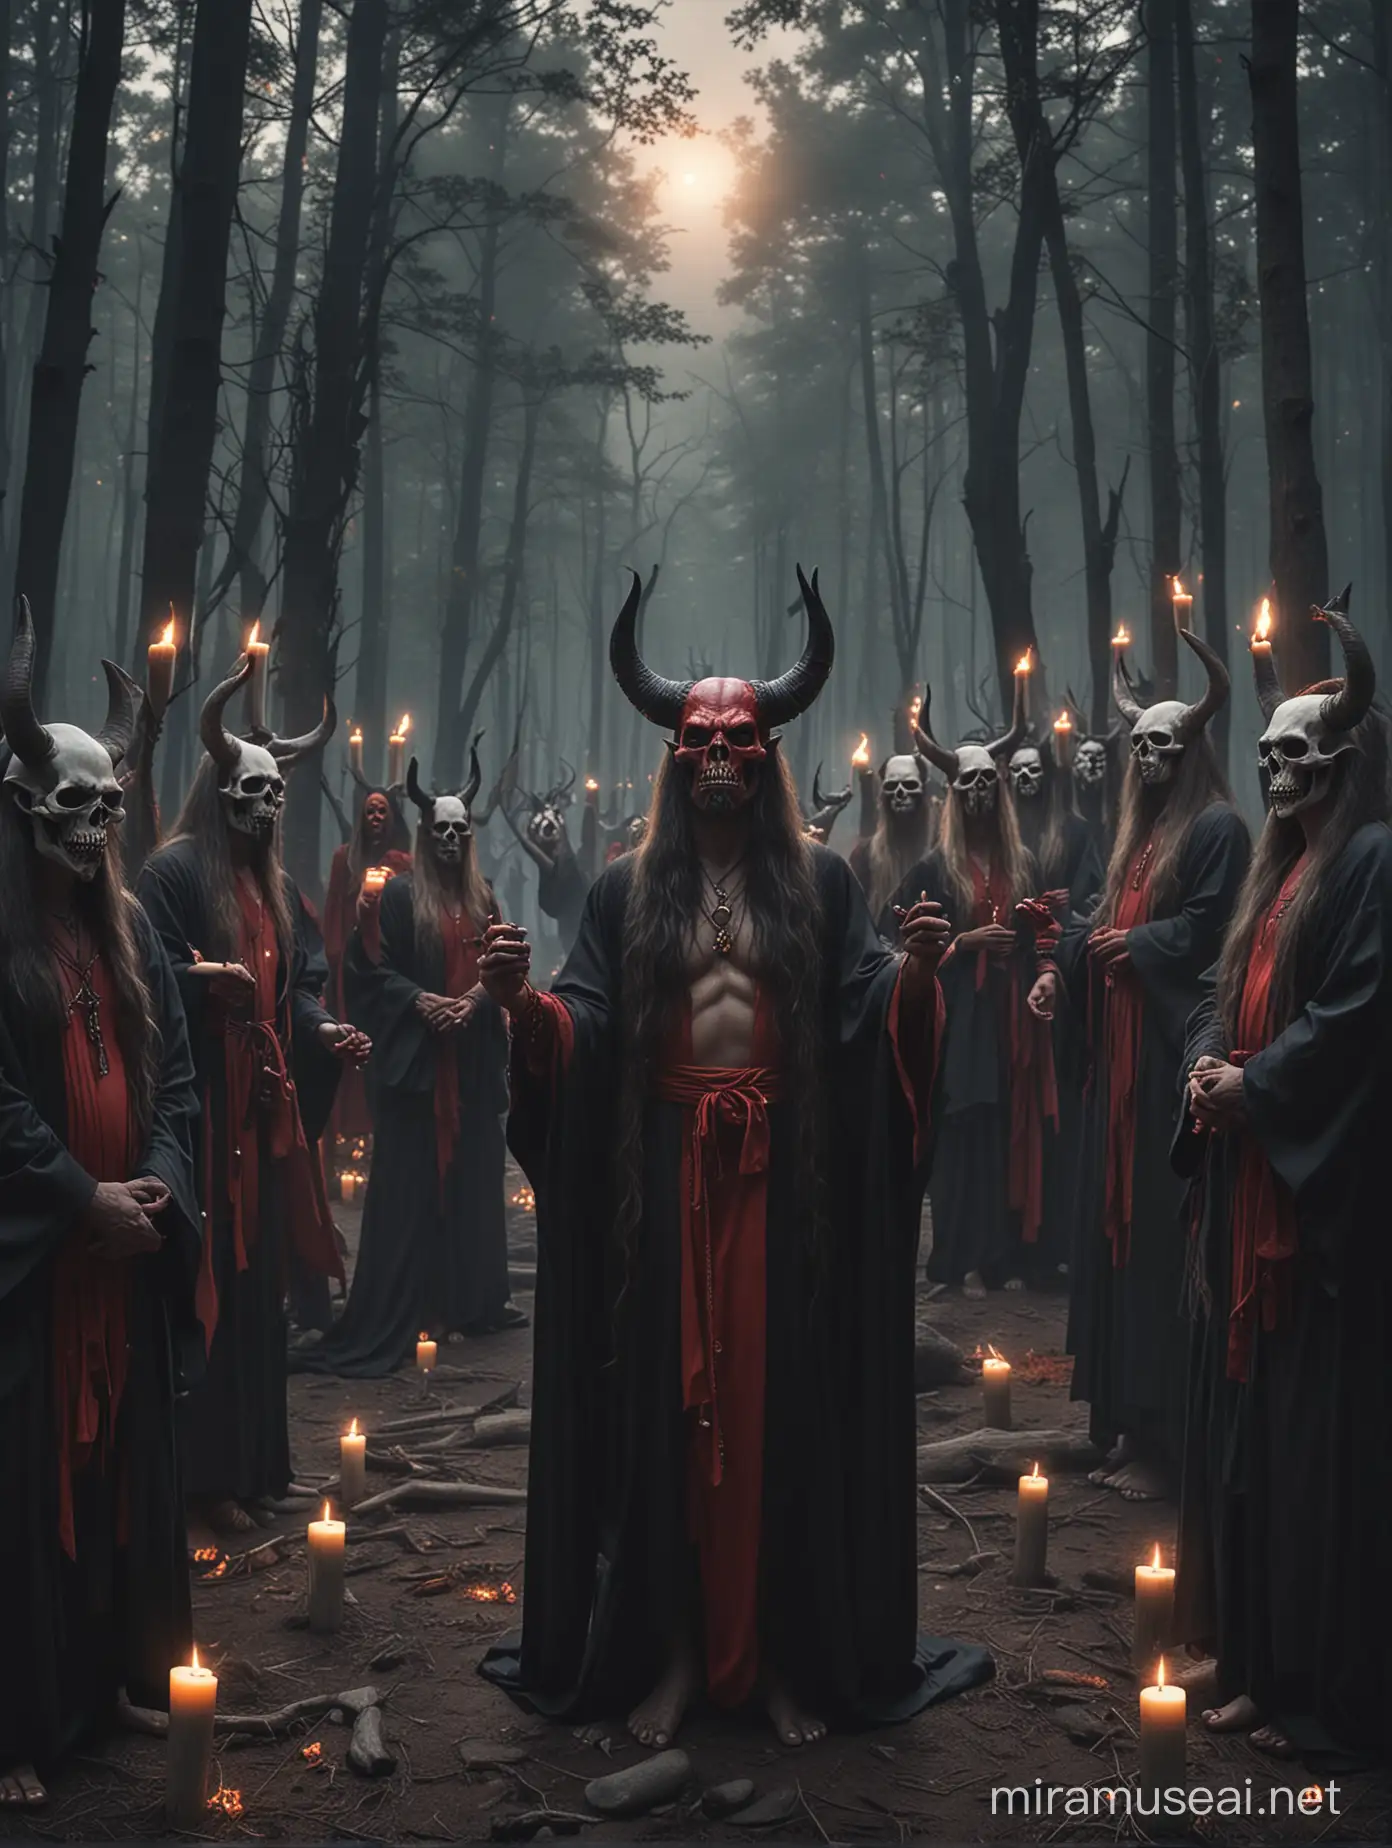 hyper-realism, devil worshipping ceremony, robes, devil horns, satanic cult, candles, forest, during a total solar eclipse, solar flares, devil, evil, long hair, naked, skulls